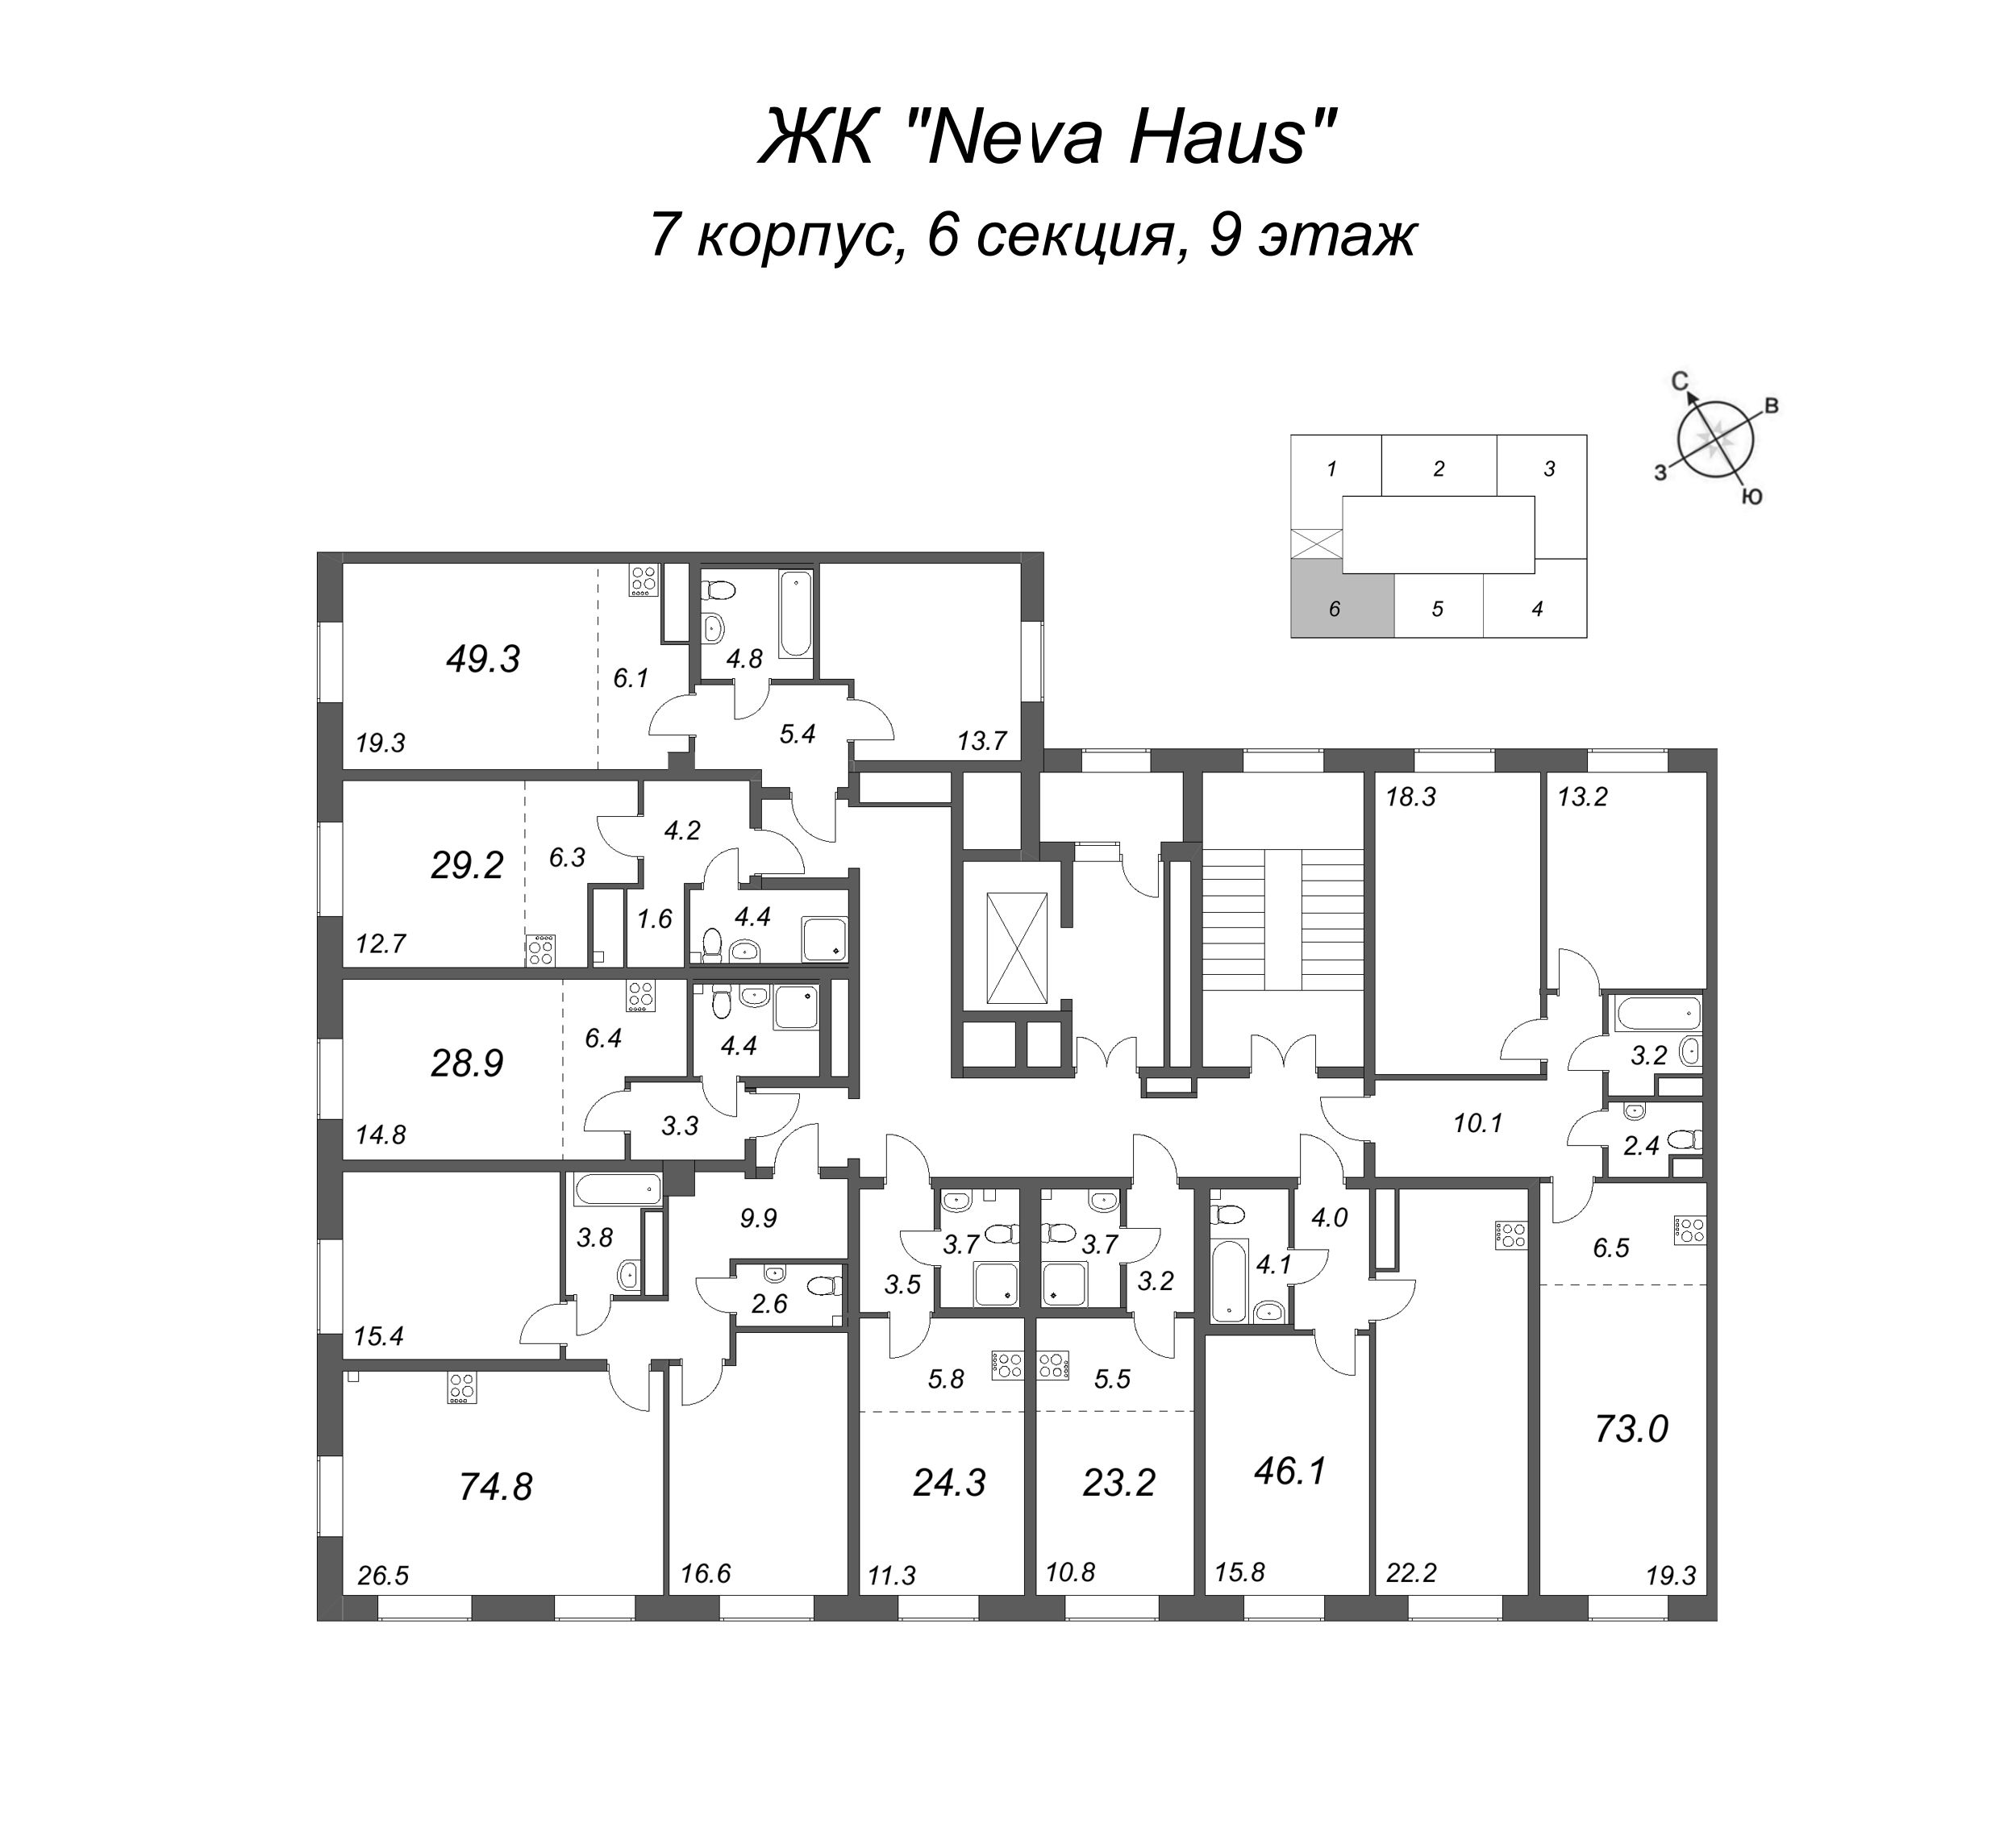 2-комнатная (Евро) квартира, 49.2 м² - планировка этажа